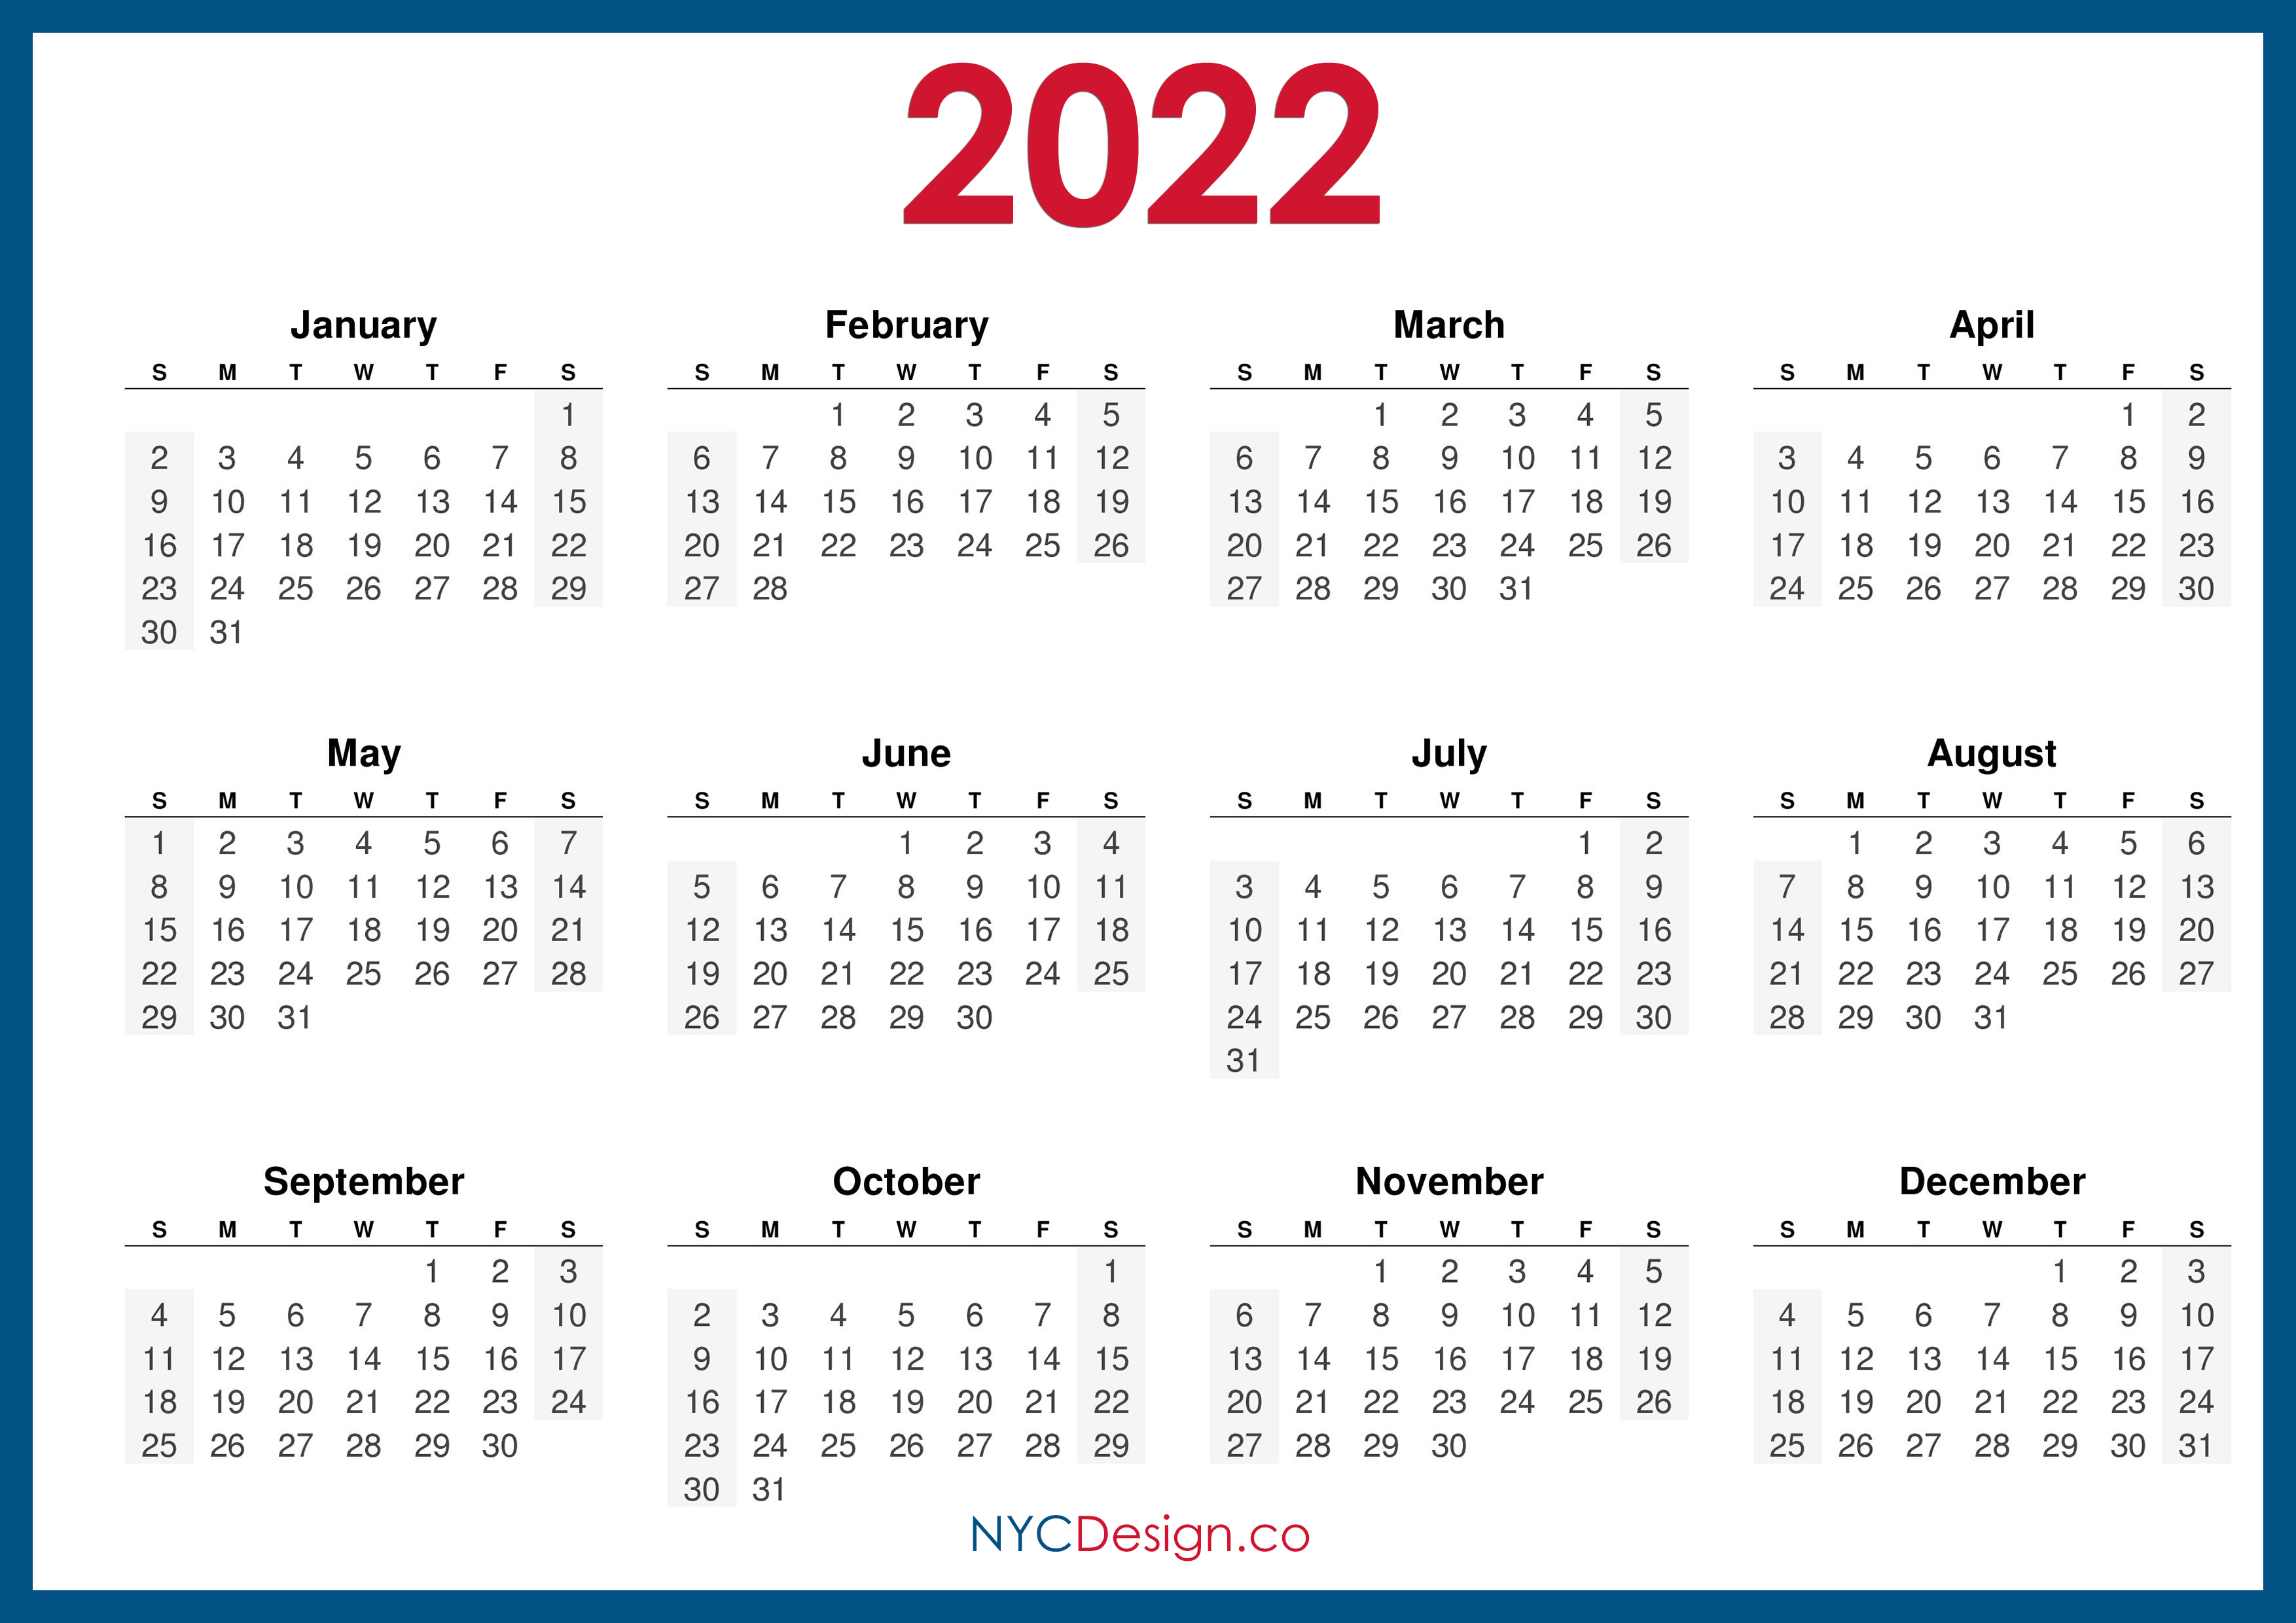 free calendar download 2022